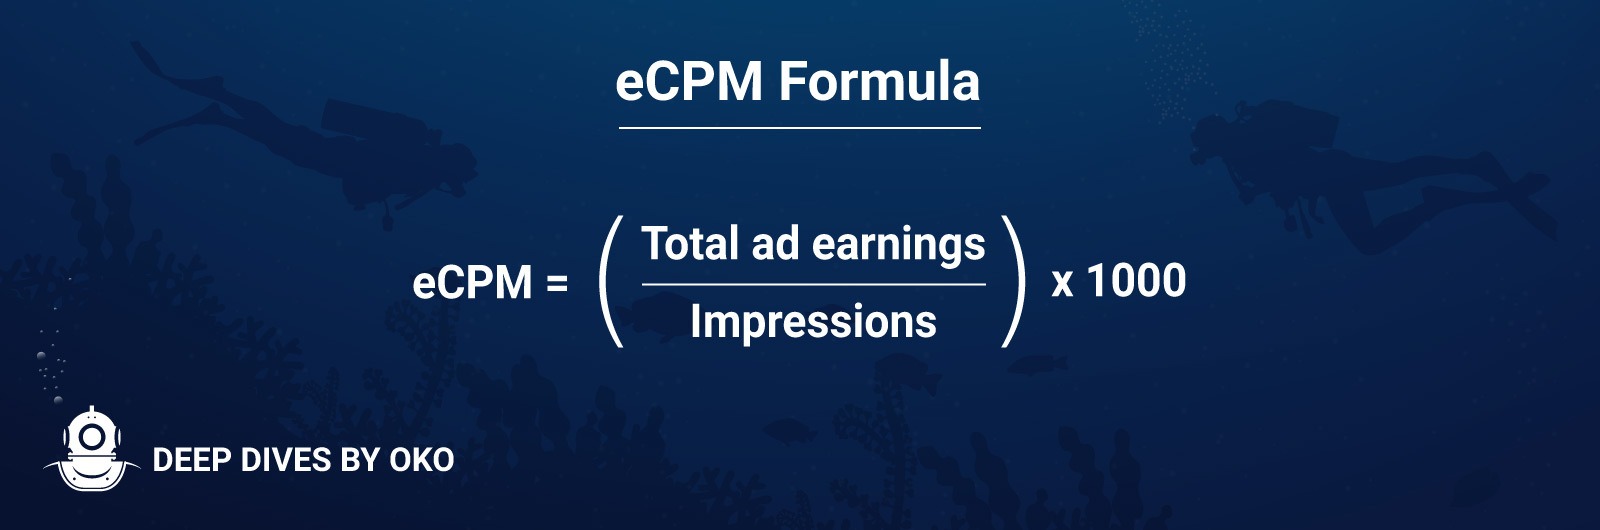 eCPM formula